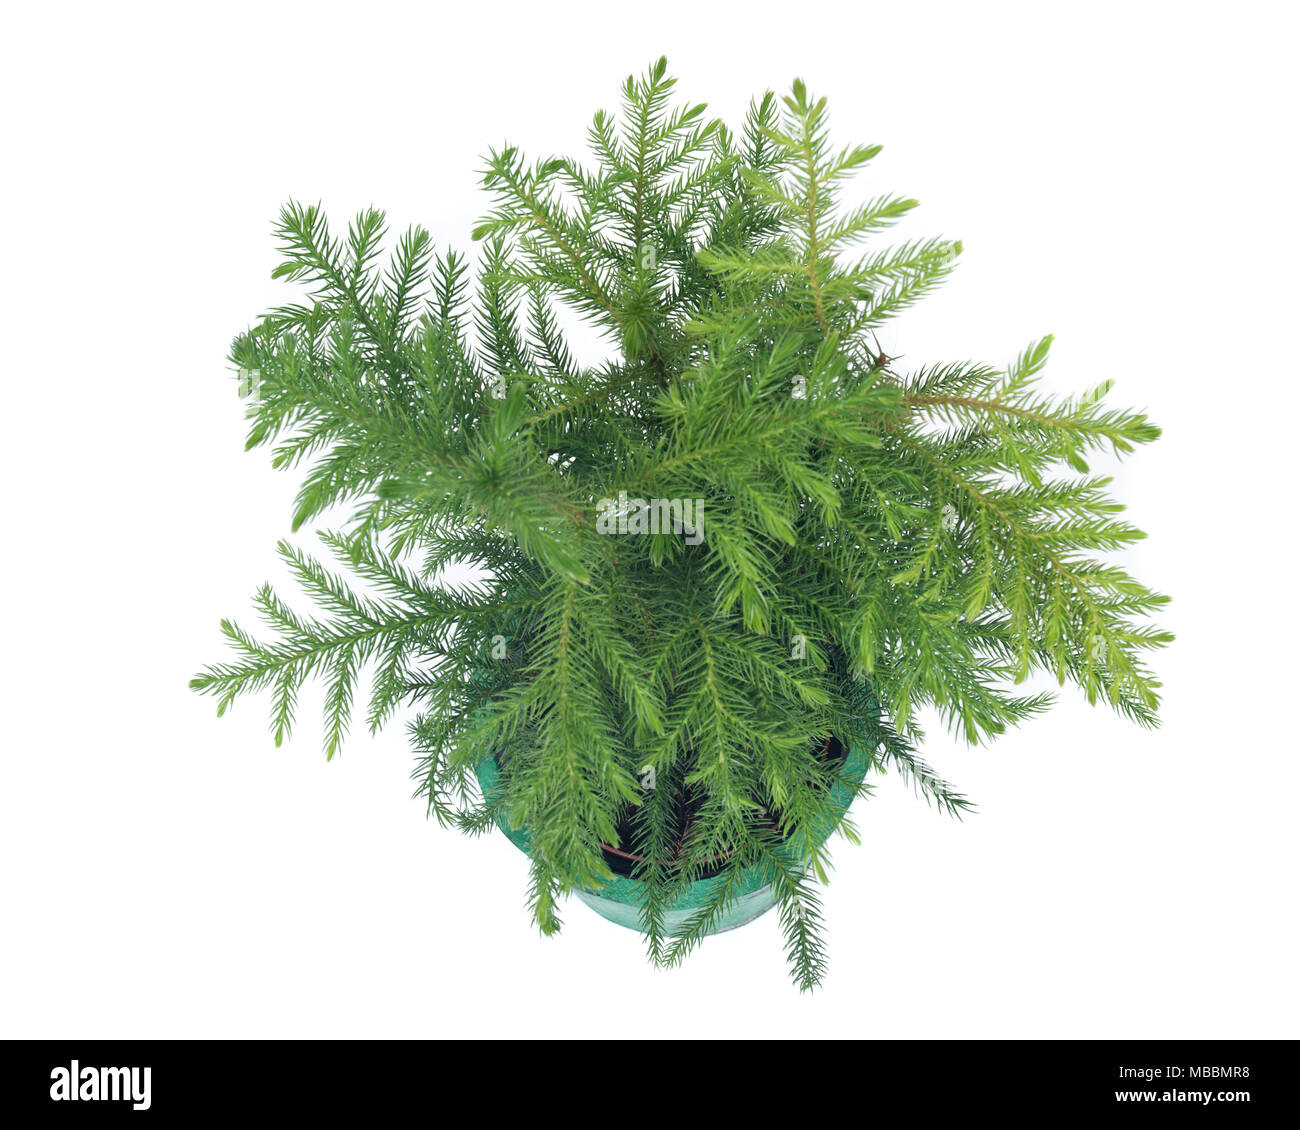 Norfolk island pine tree in decorative pot isolated on white background Stock Photo